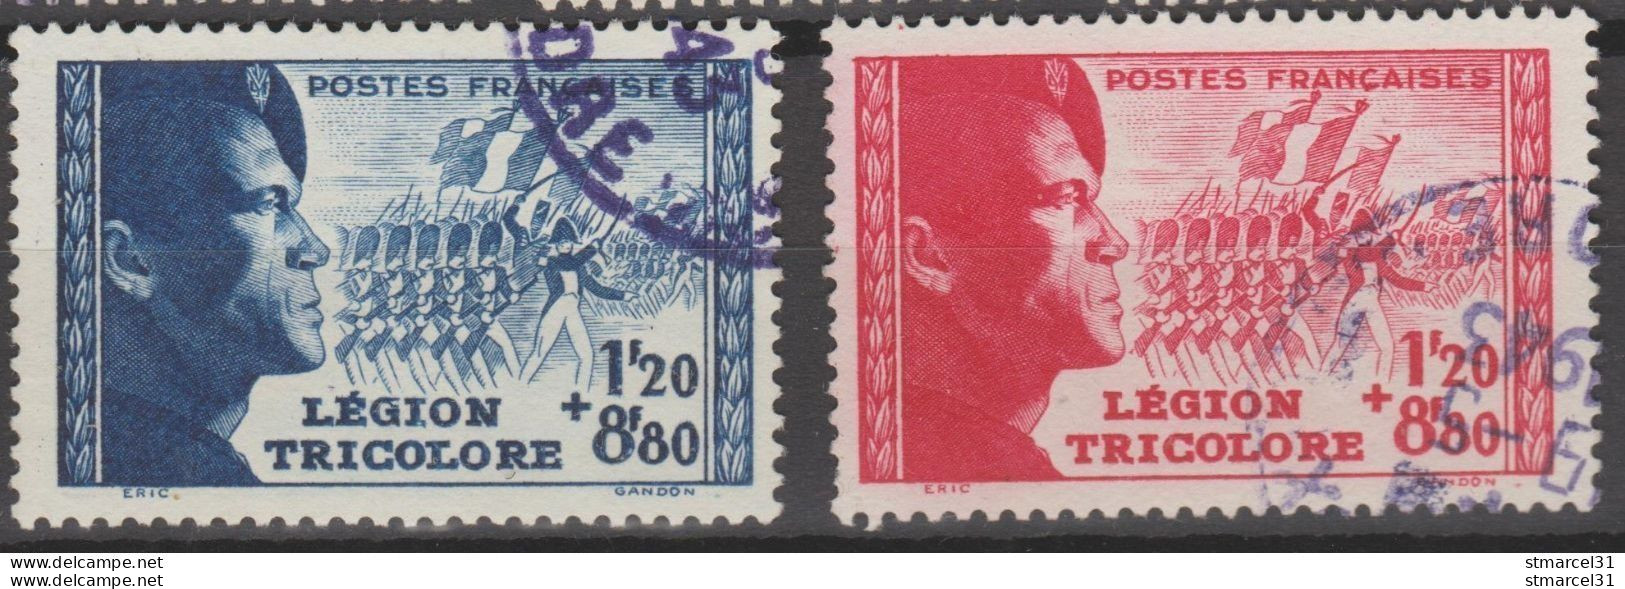 EN OBLITERATIONS De LUXE Paire N°565 à 566 TBE Cote 22€ - Used Stamps